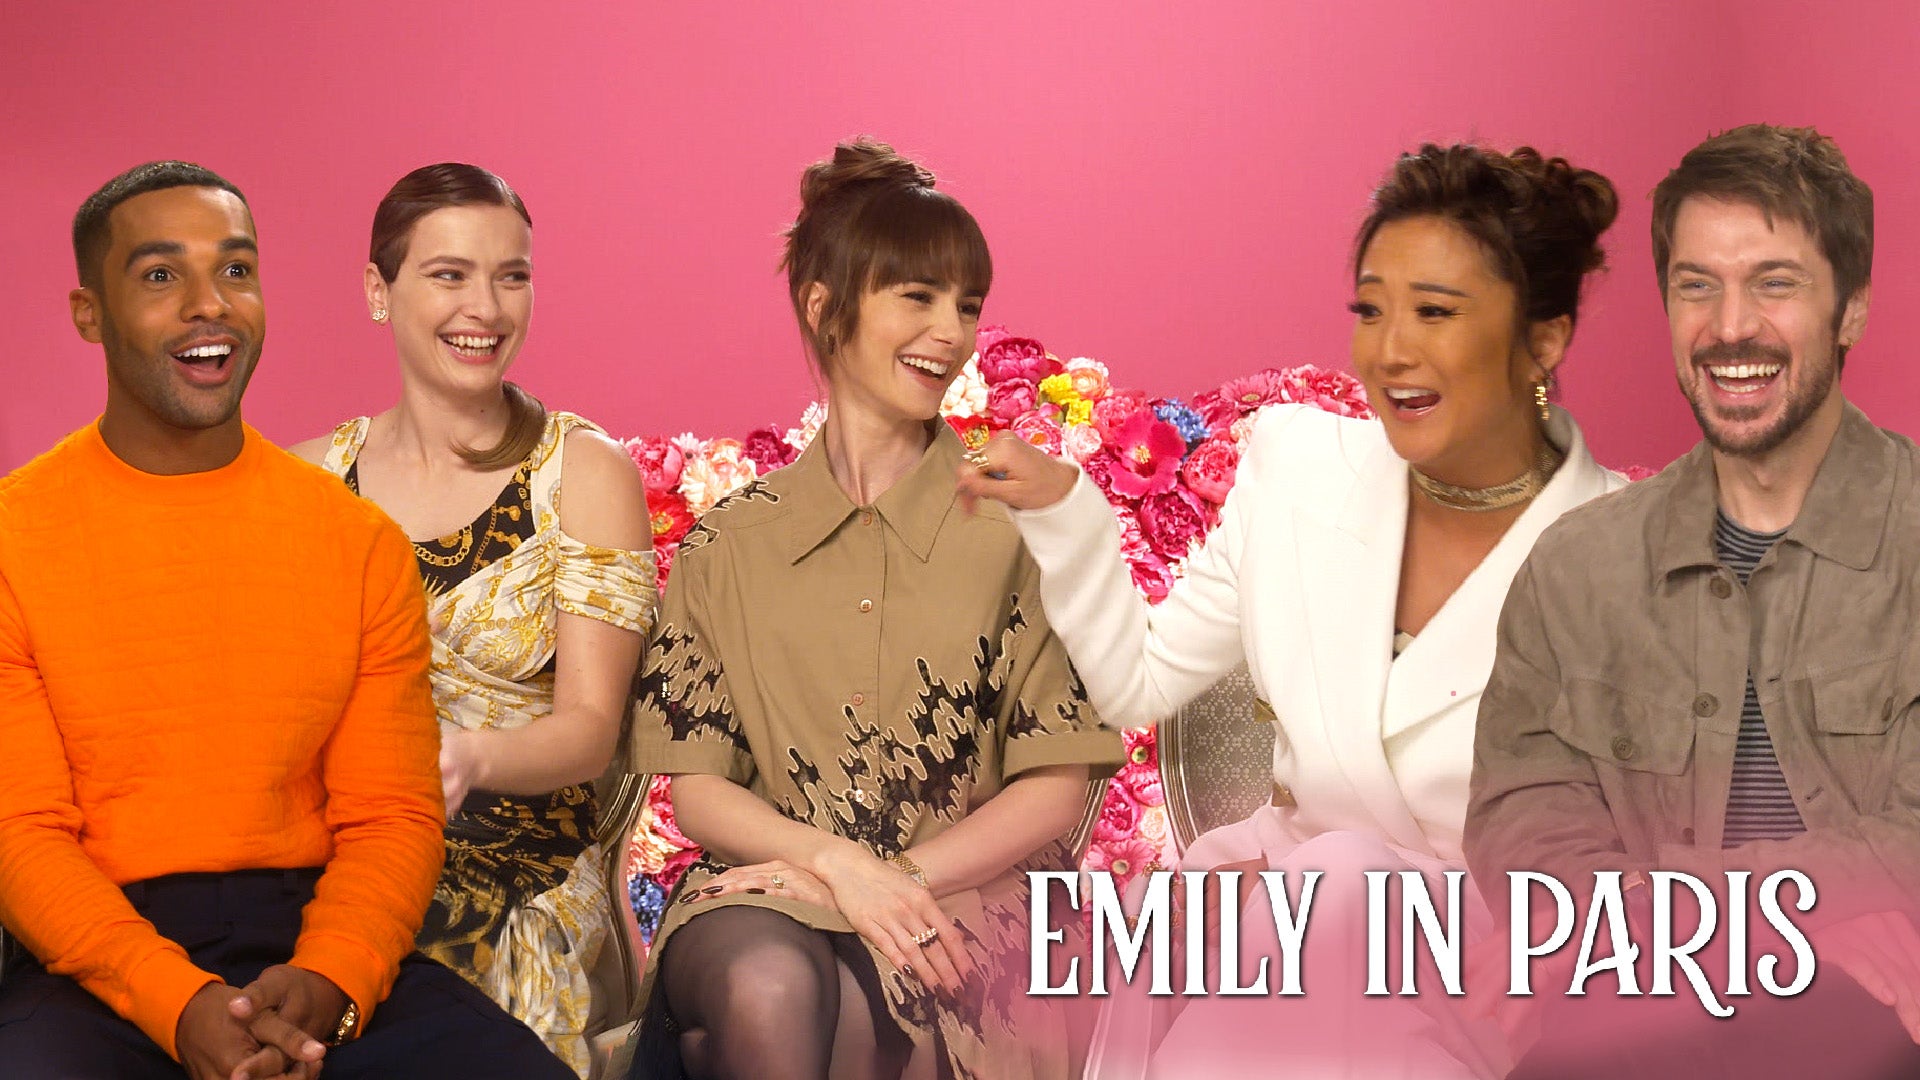 Emily in Paris' Co-Stars Ashley Park and Paul Forman Spark Romance